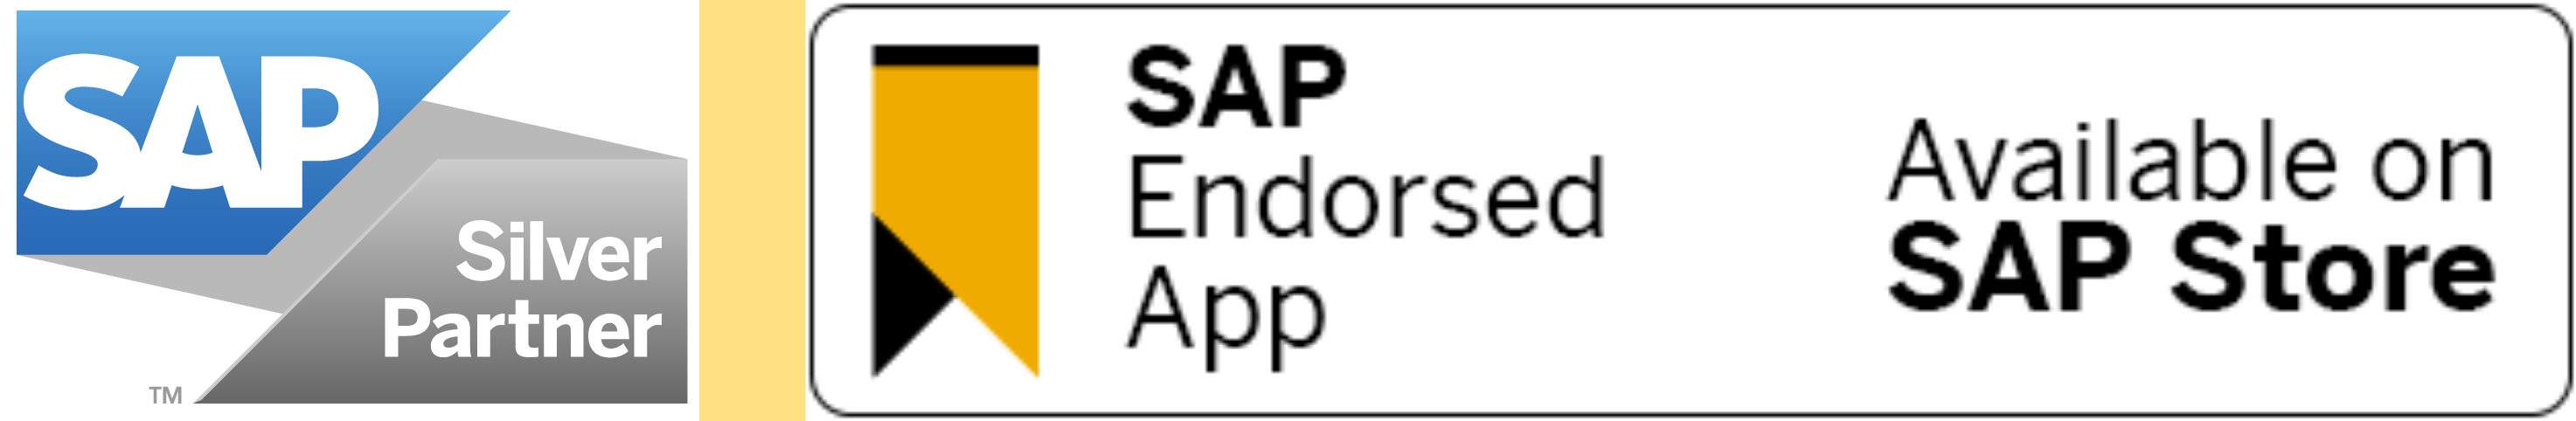 SAP Silver Partner und SAP Endorsed App